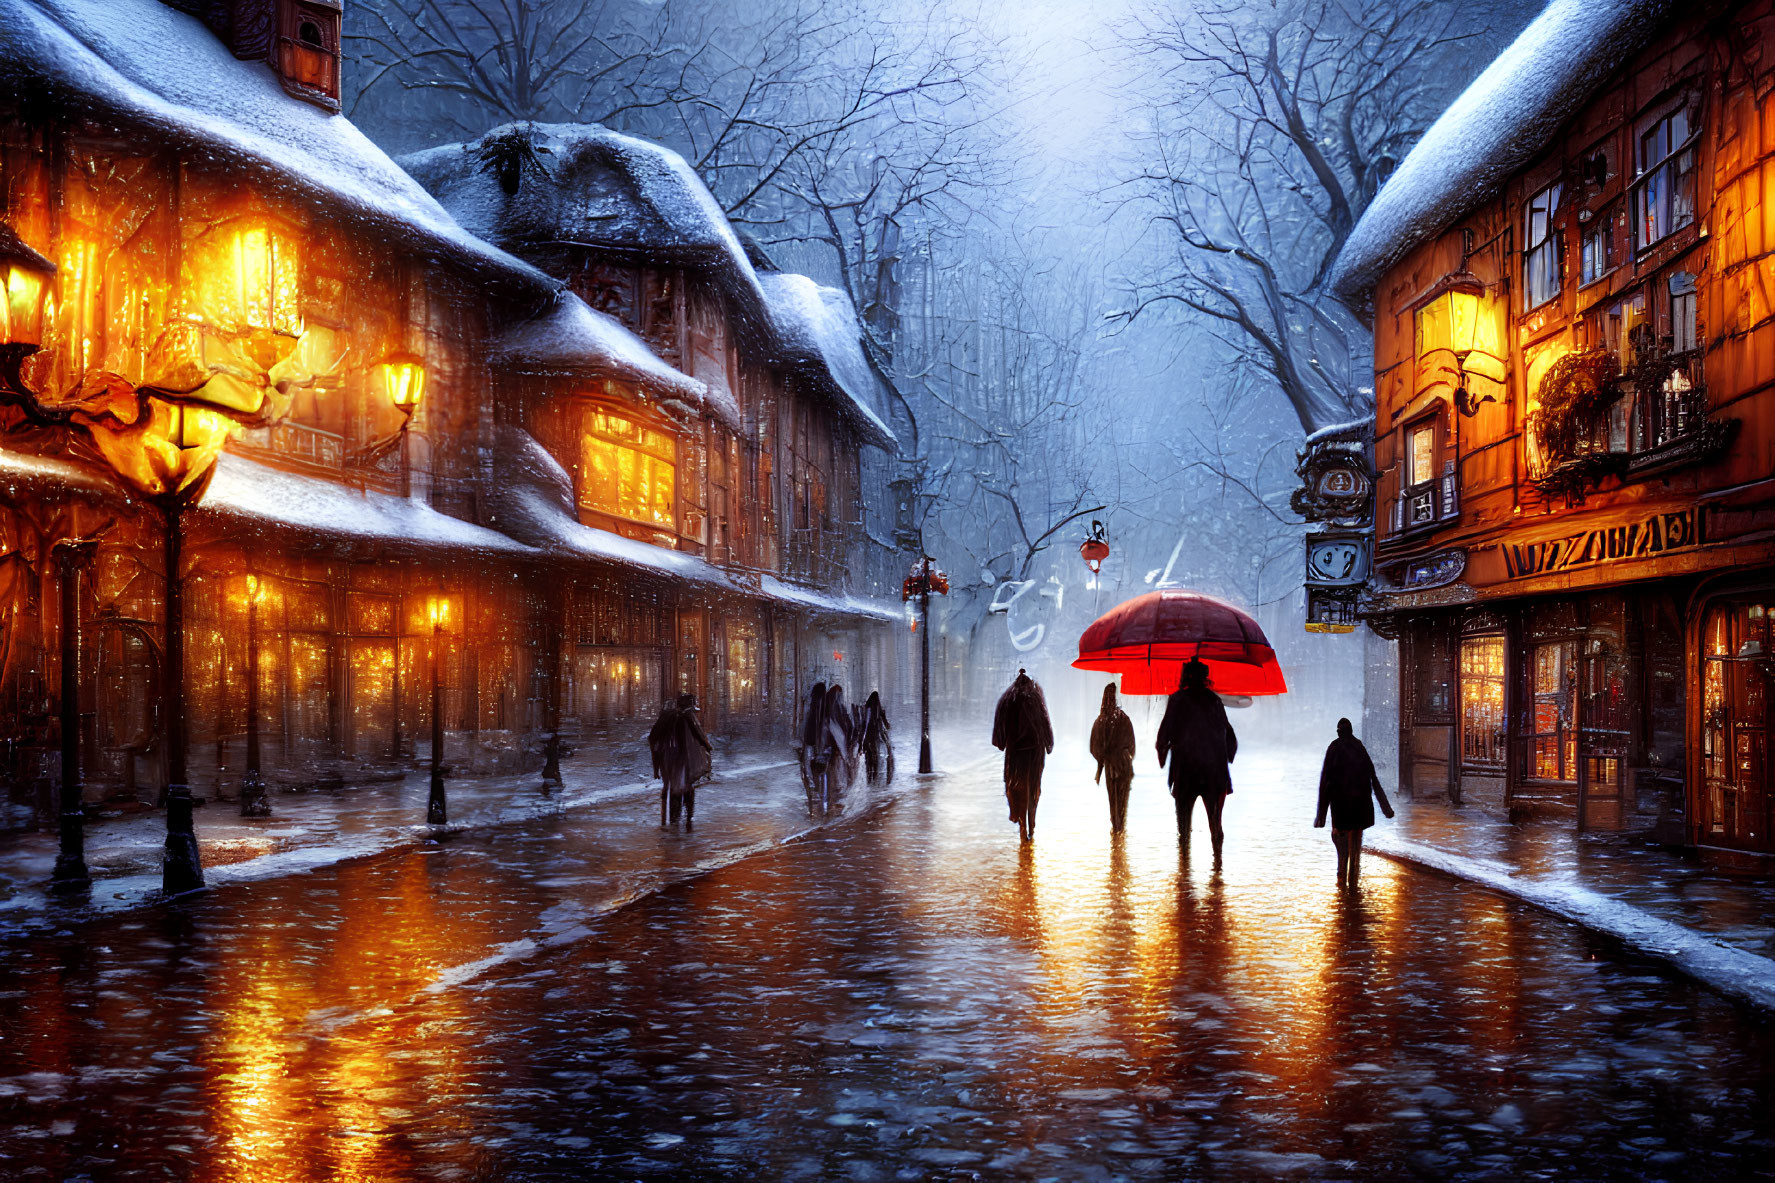 Snowy Evening Street Scene with Red Umbrella